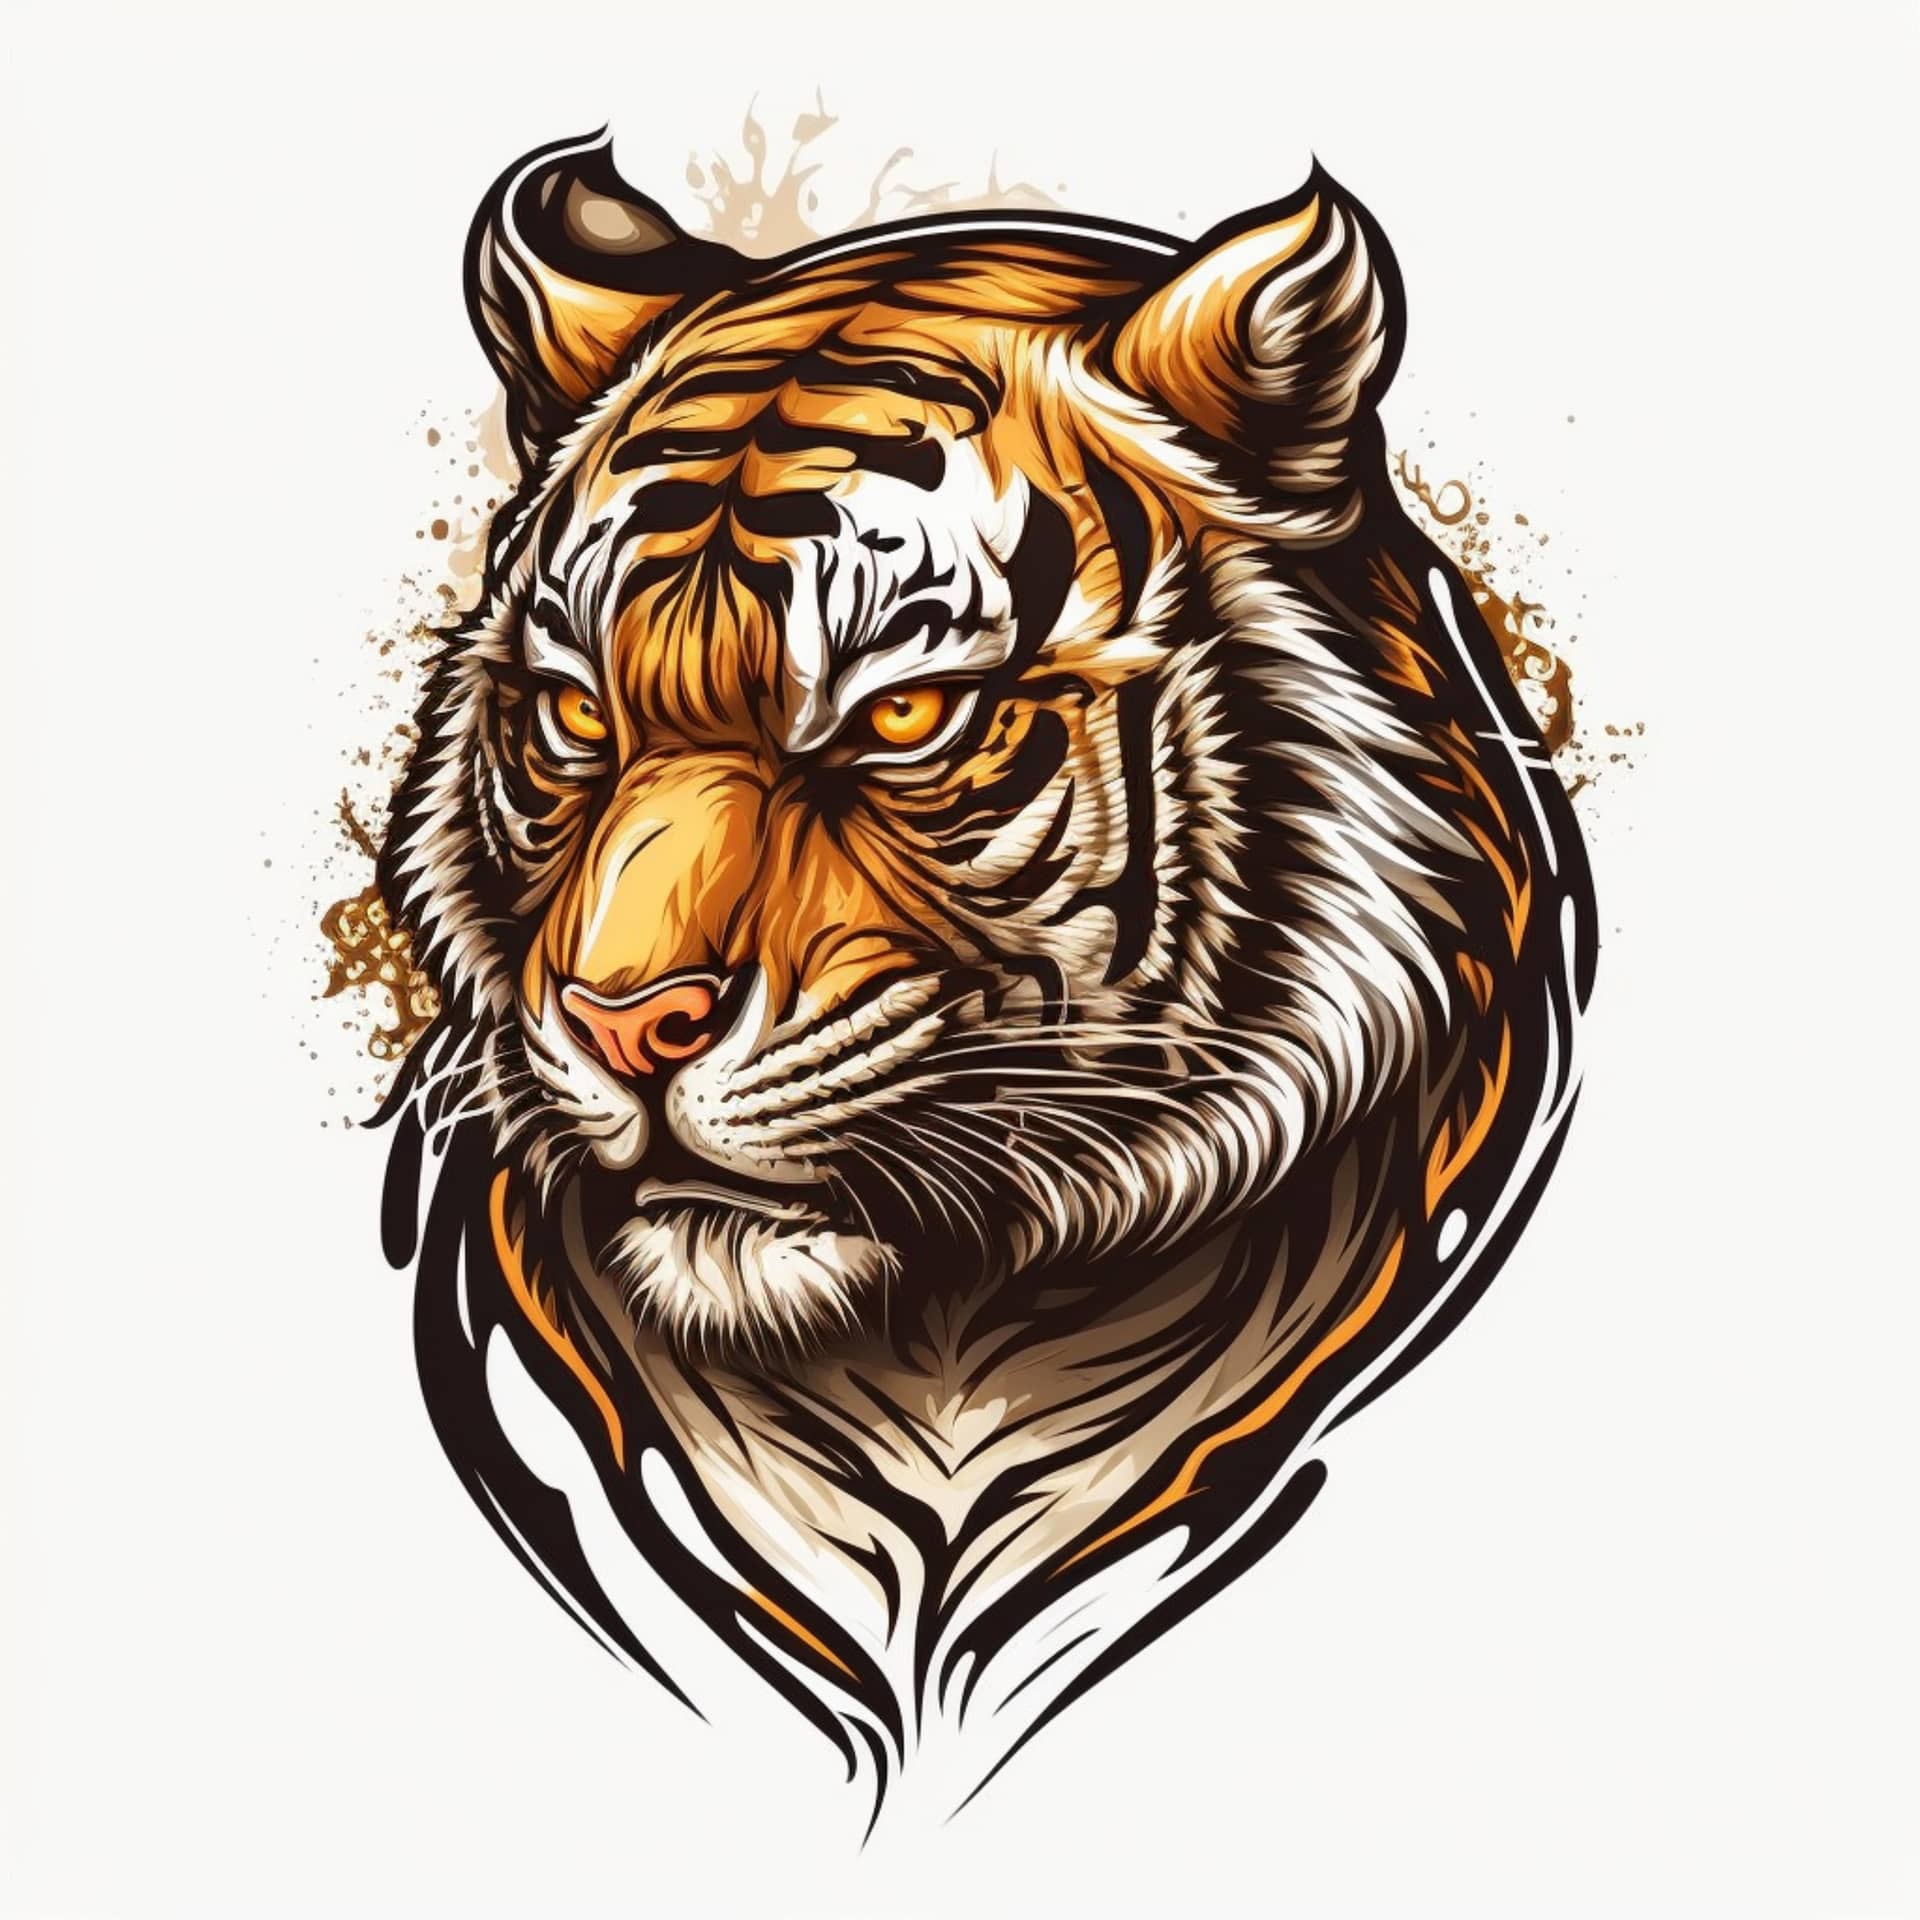 Cool tiger logo vector illustration excellent picture